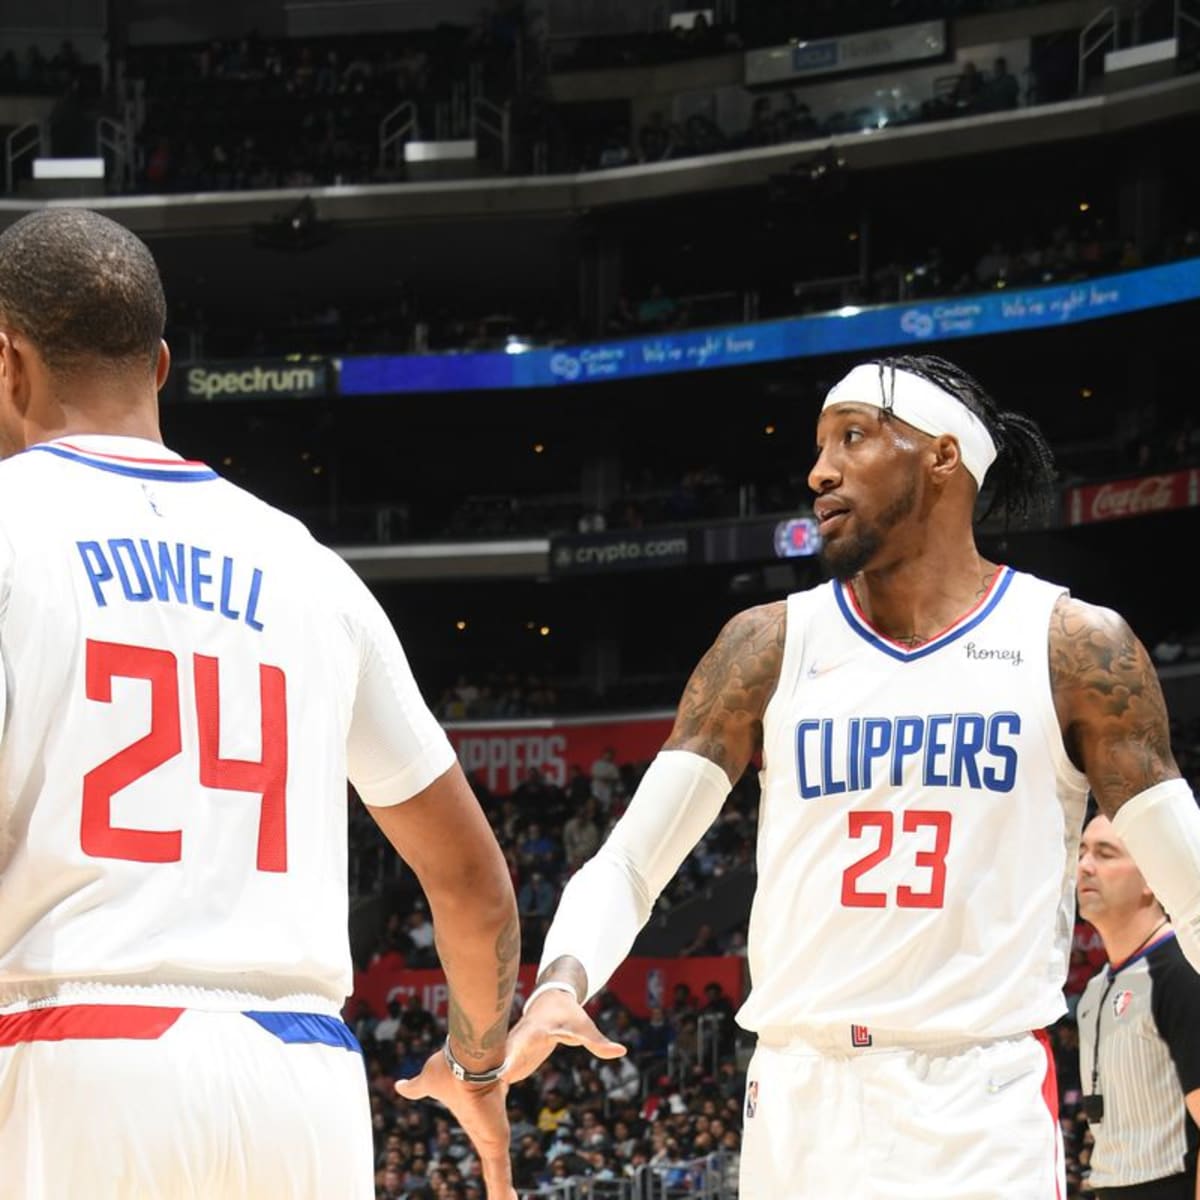 Clippers vs. Bucks final score: Clippers fall to Bucks 137-113